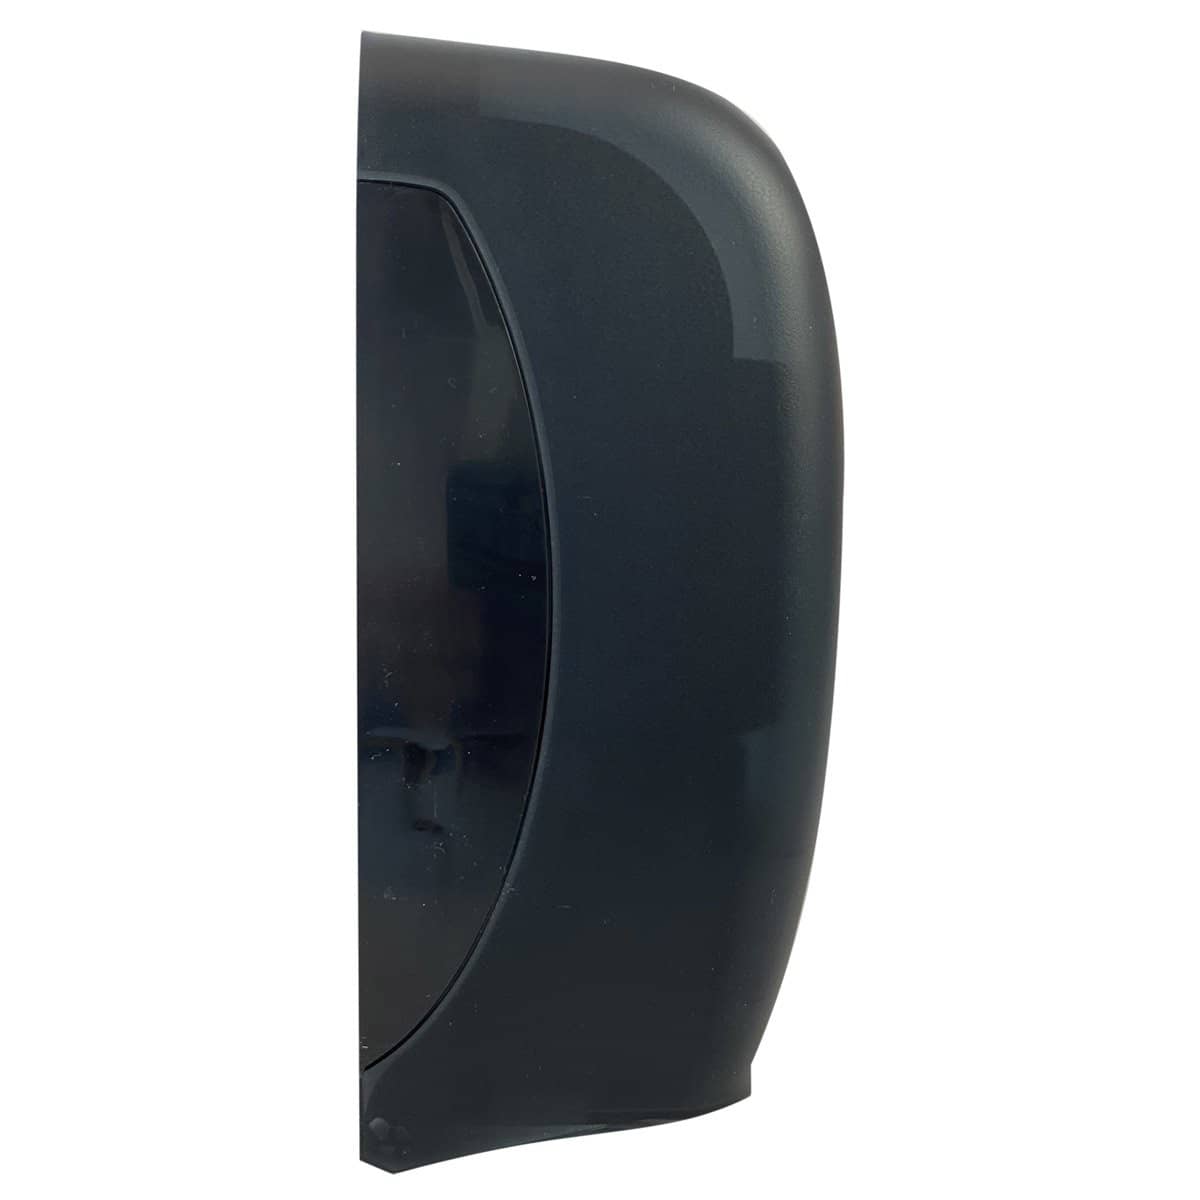 VISTA Sani Suds Auto Soap Dispenser, Black Translucent - SD1001 - TotalRestroom.com